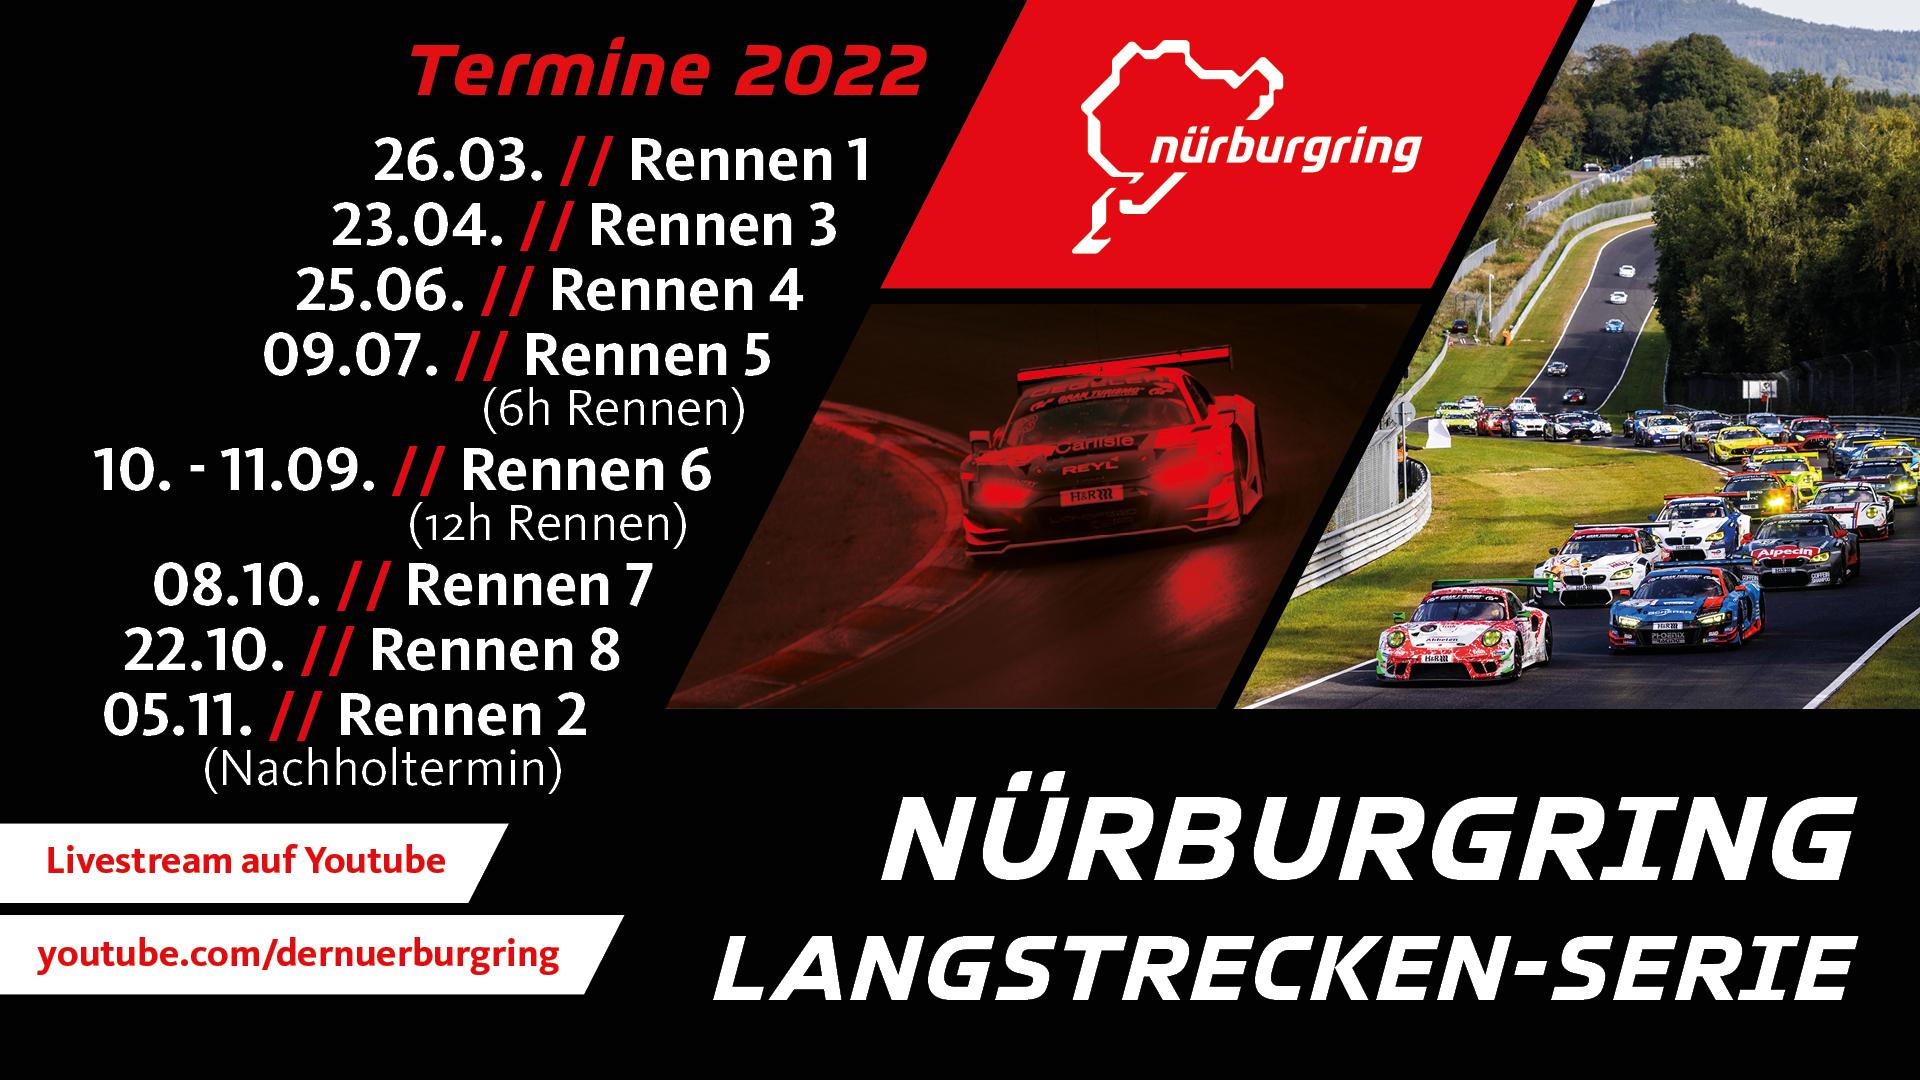 Plakat, @ Nürburgring 1927 GmbH & Co KG